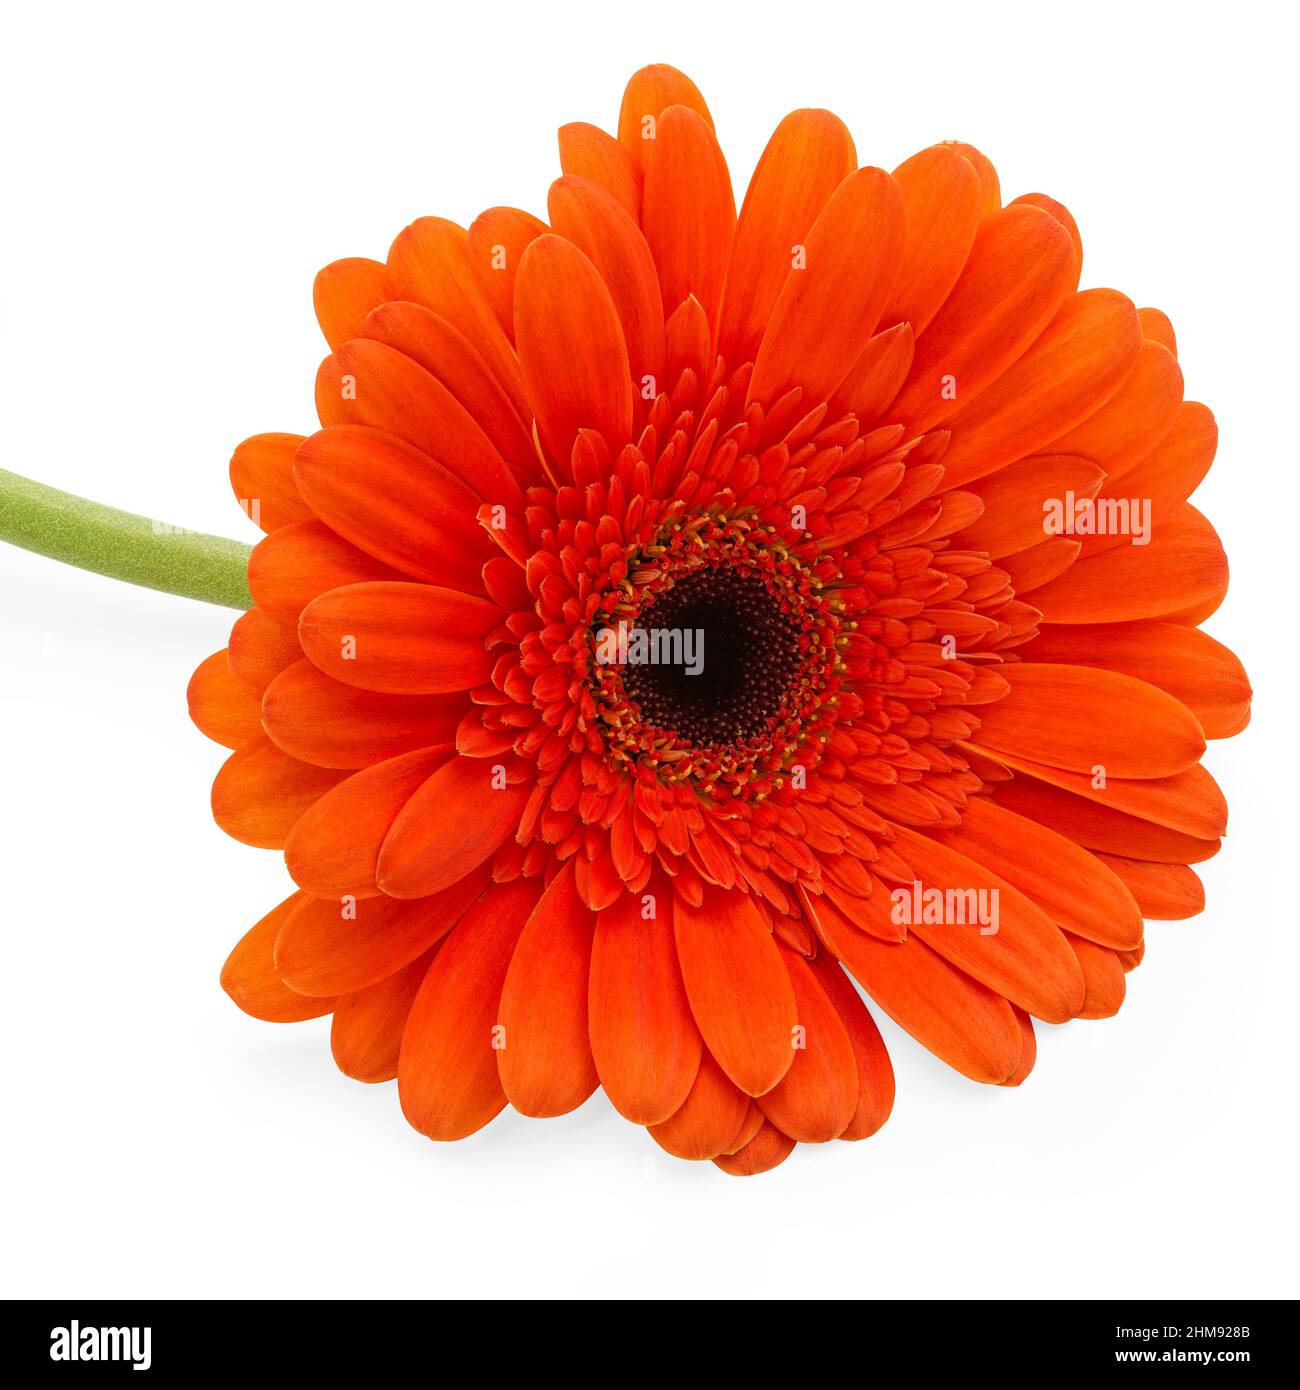 Orange Gerbera daisy type flower on white background Stock Photo